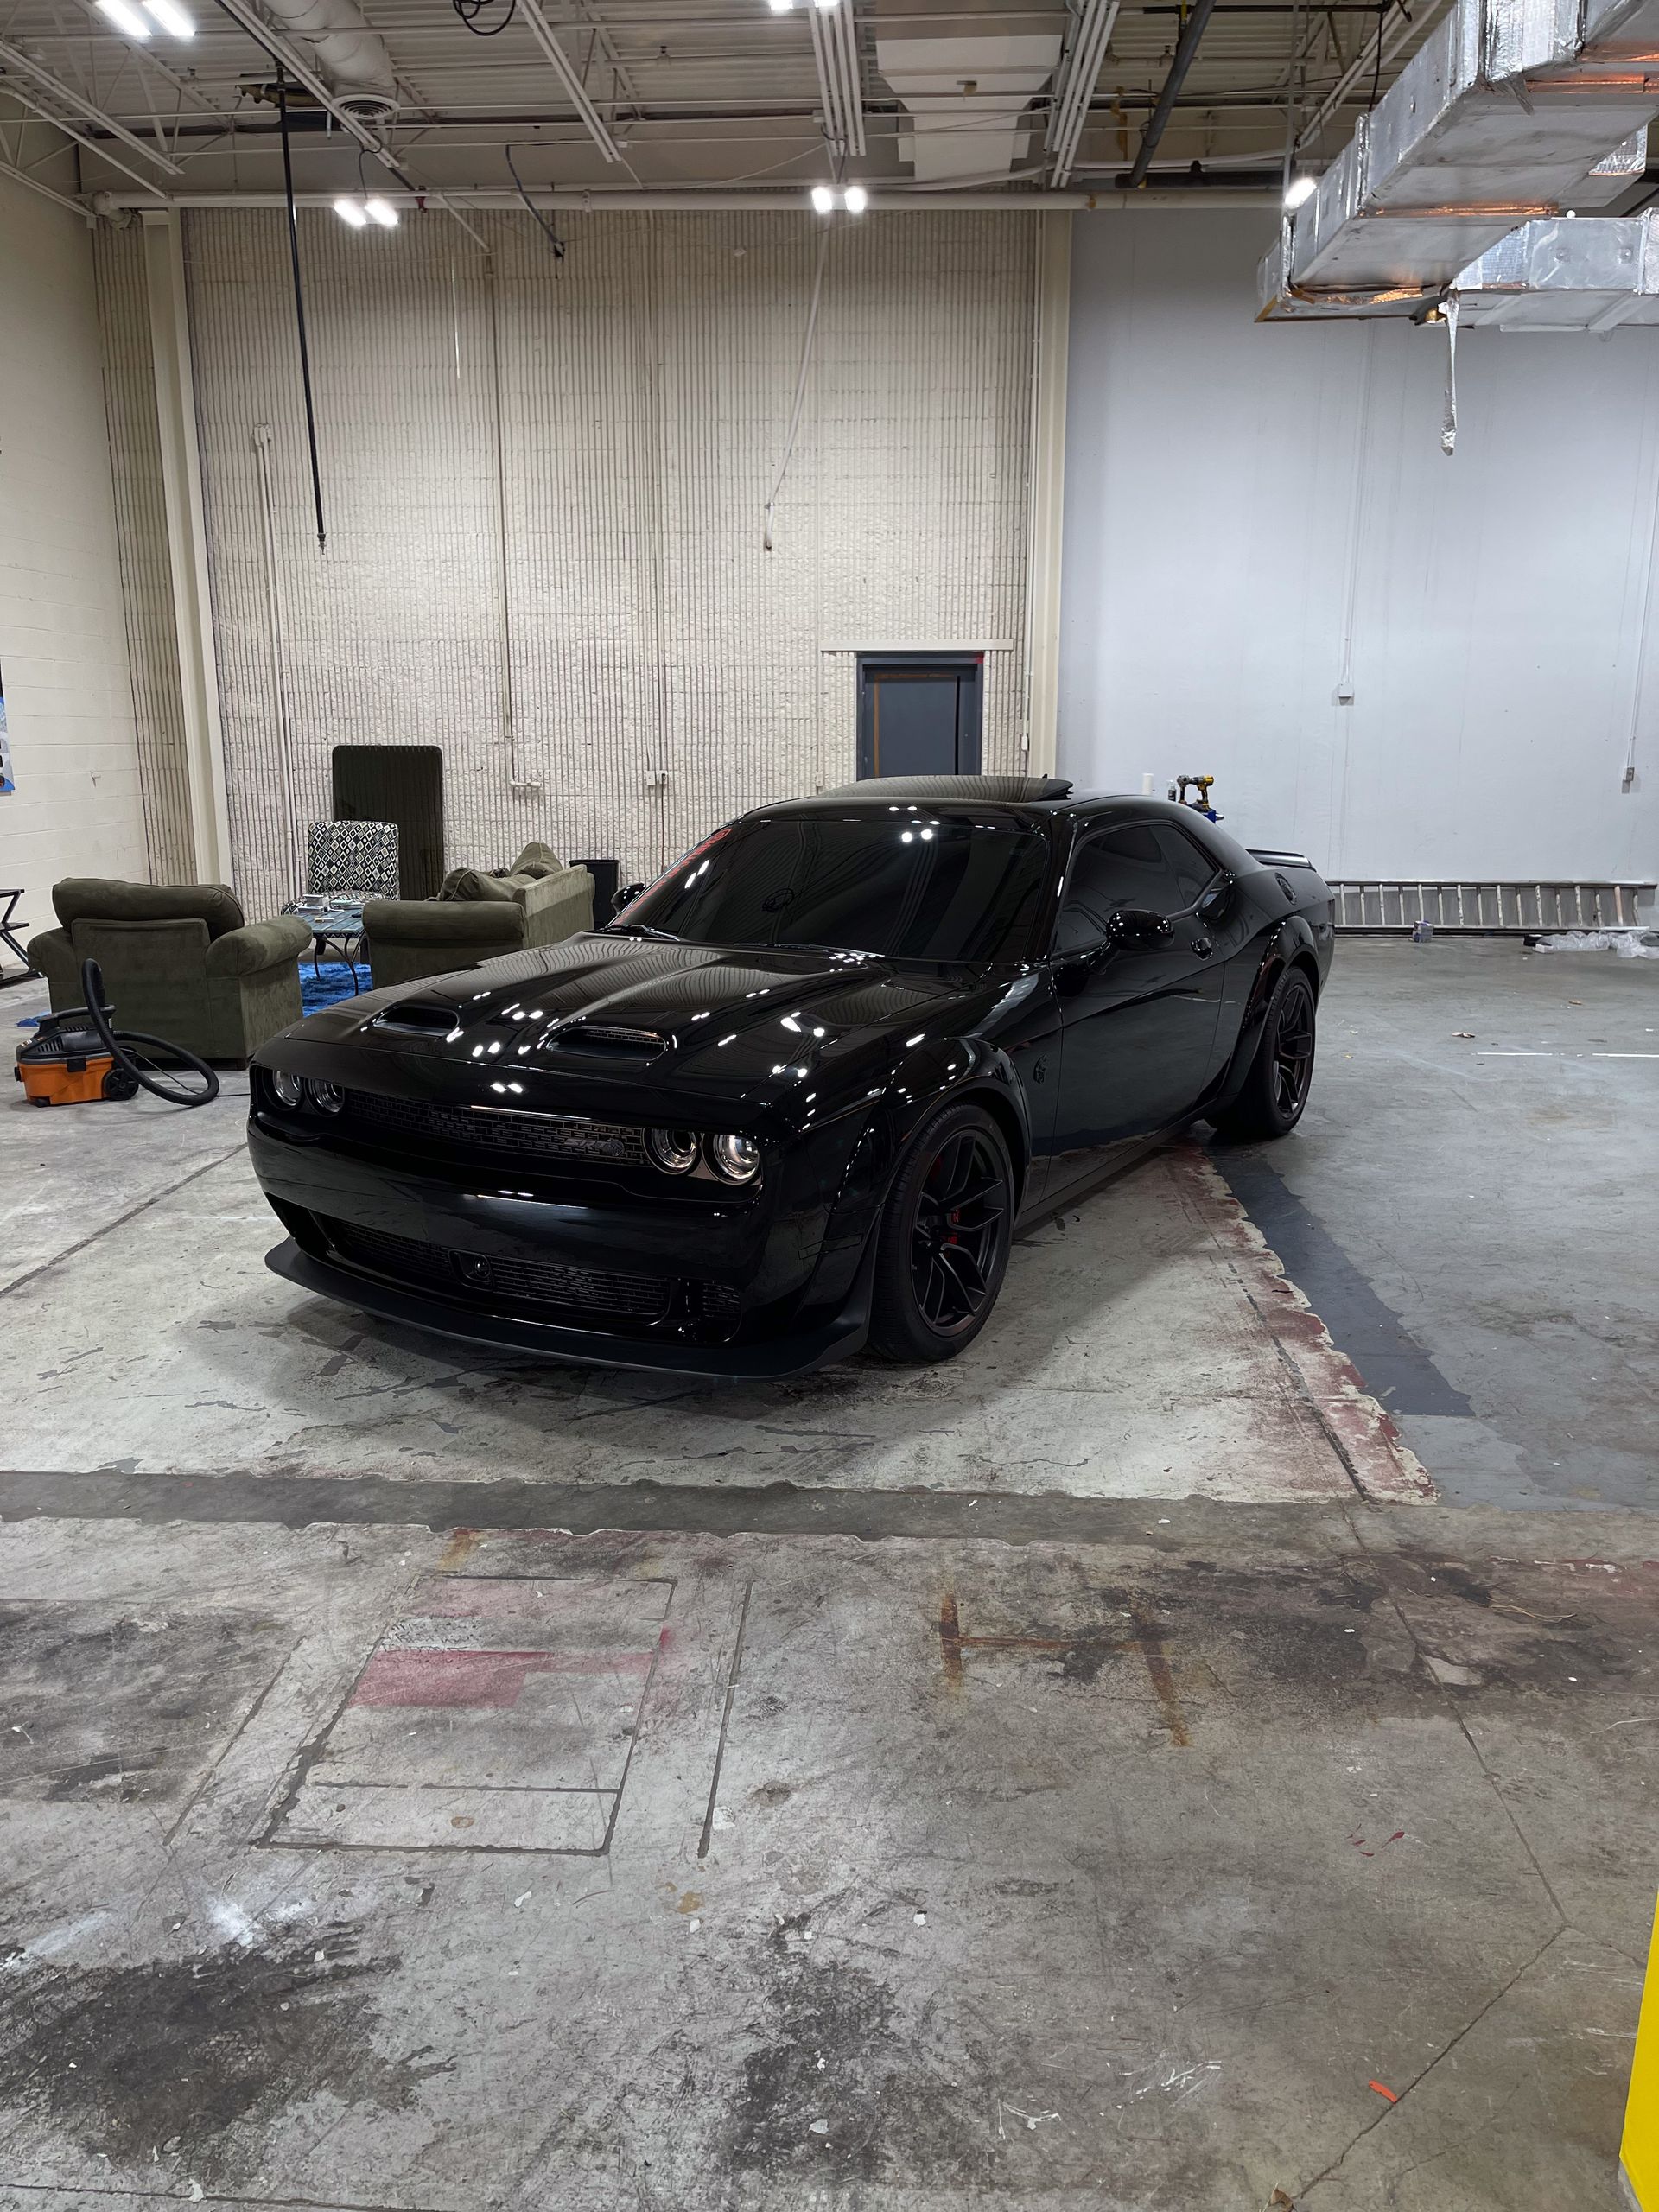 a black dodge challenger is parked in a garage.